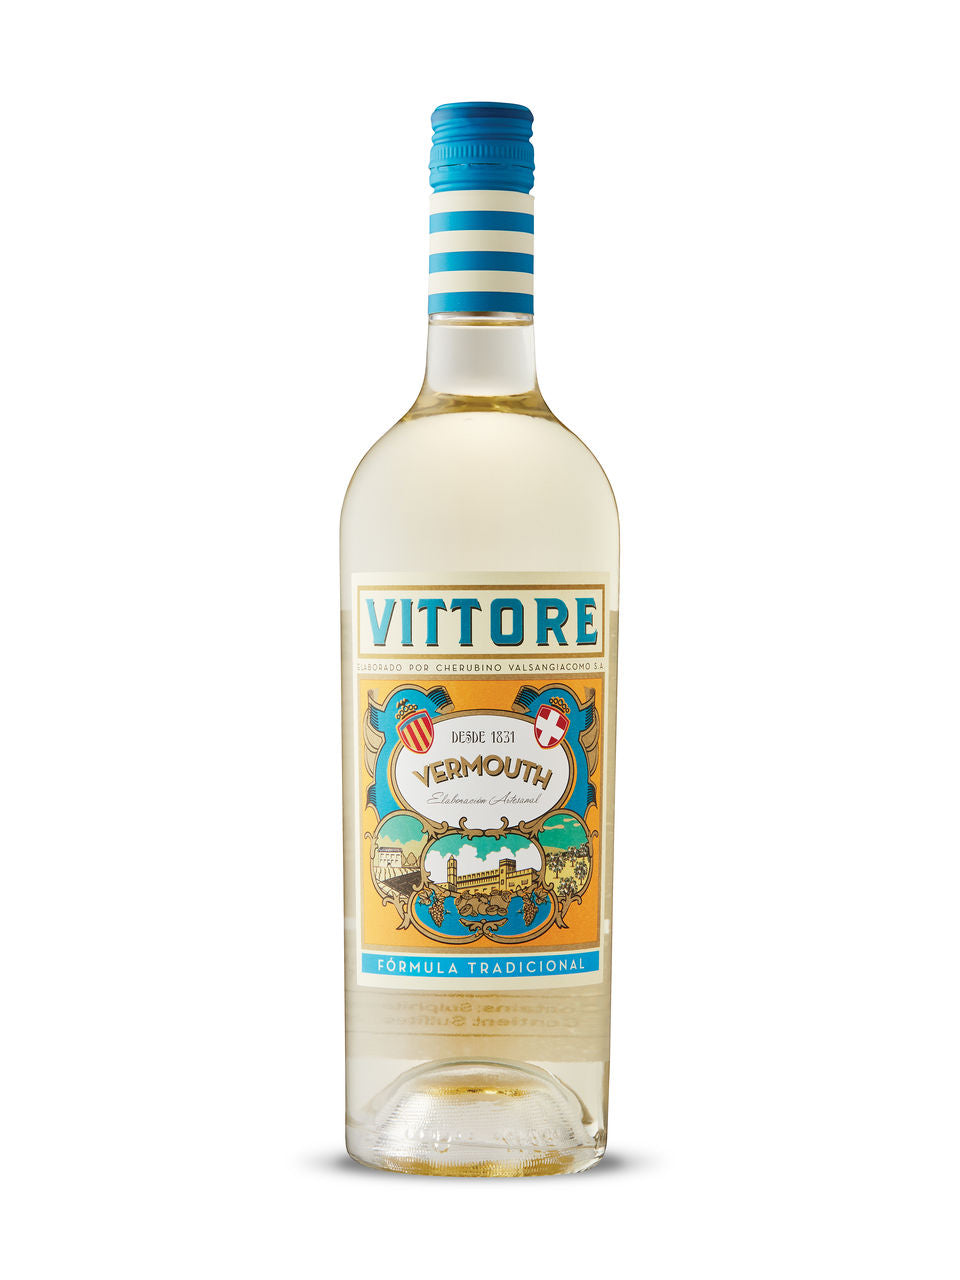 Vittore White Vermouth 750 ml bottle VINTAGES